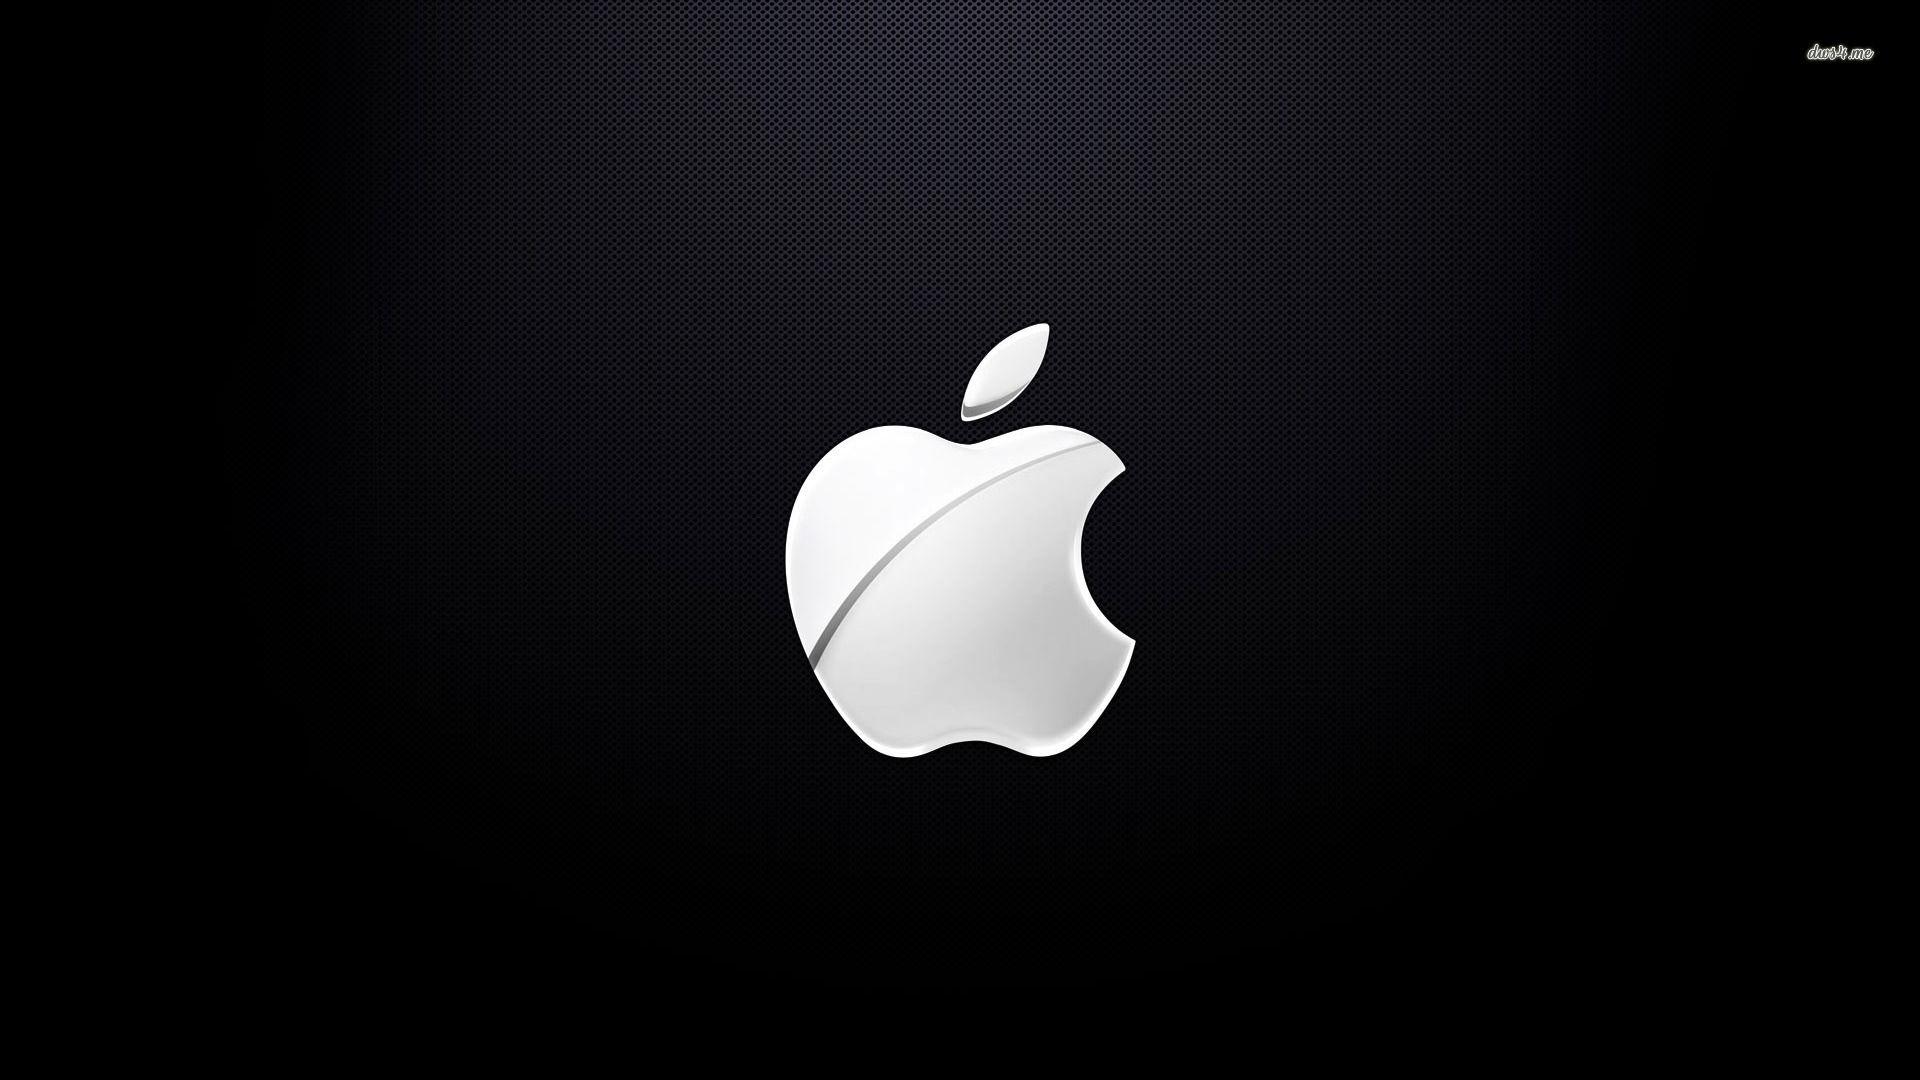 Apple's Logo Wallpaper Free .wallpaperaccess.com